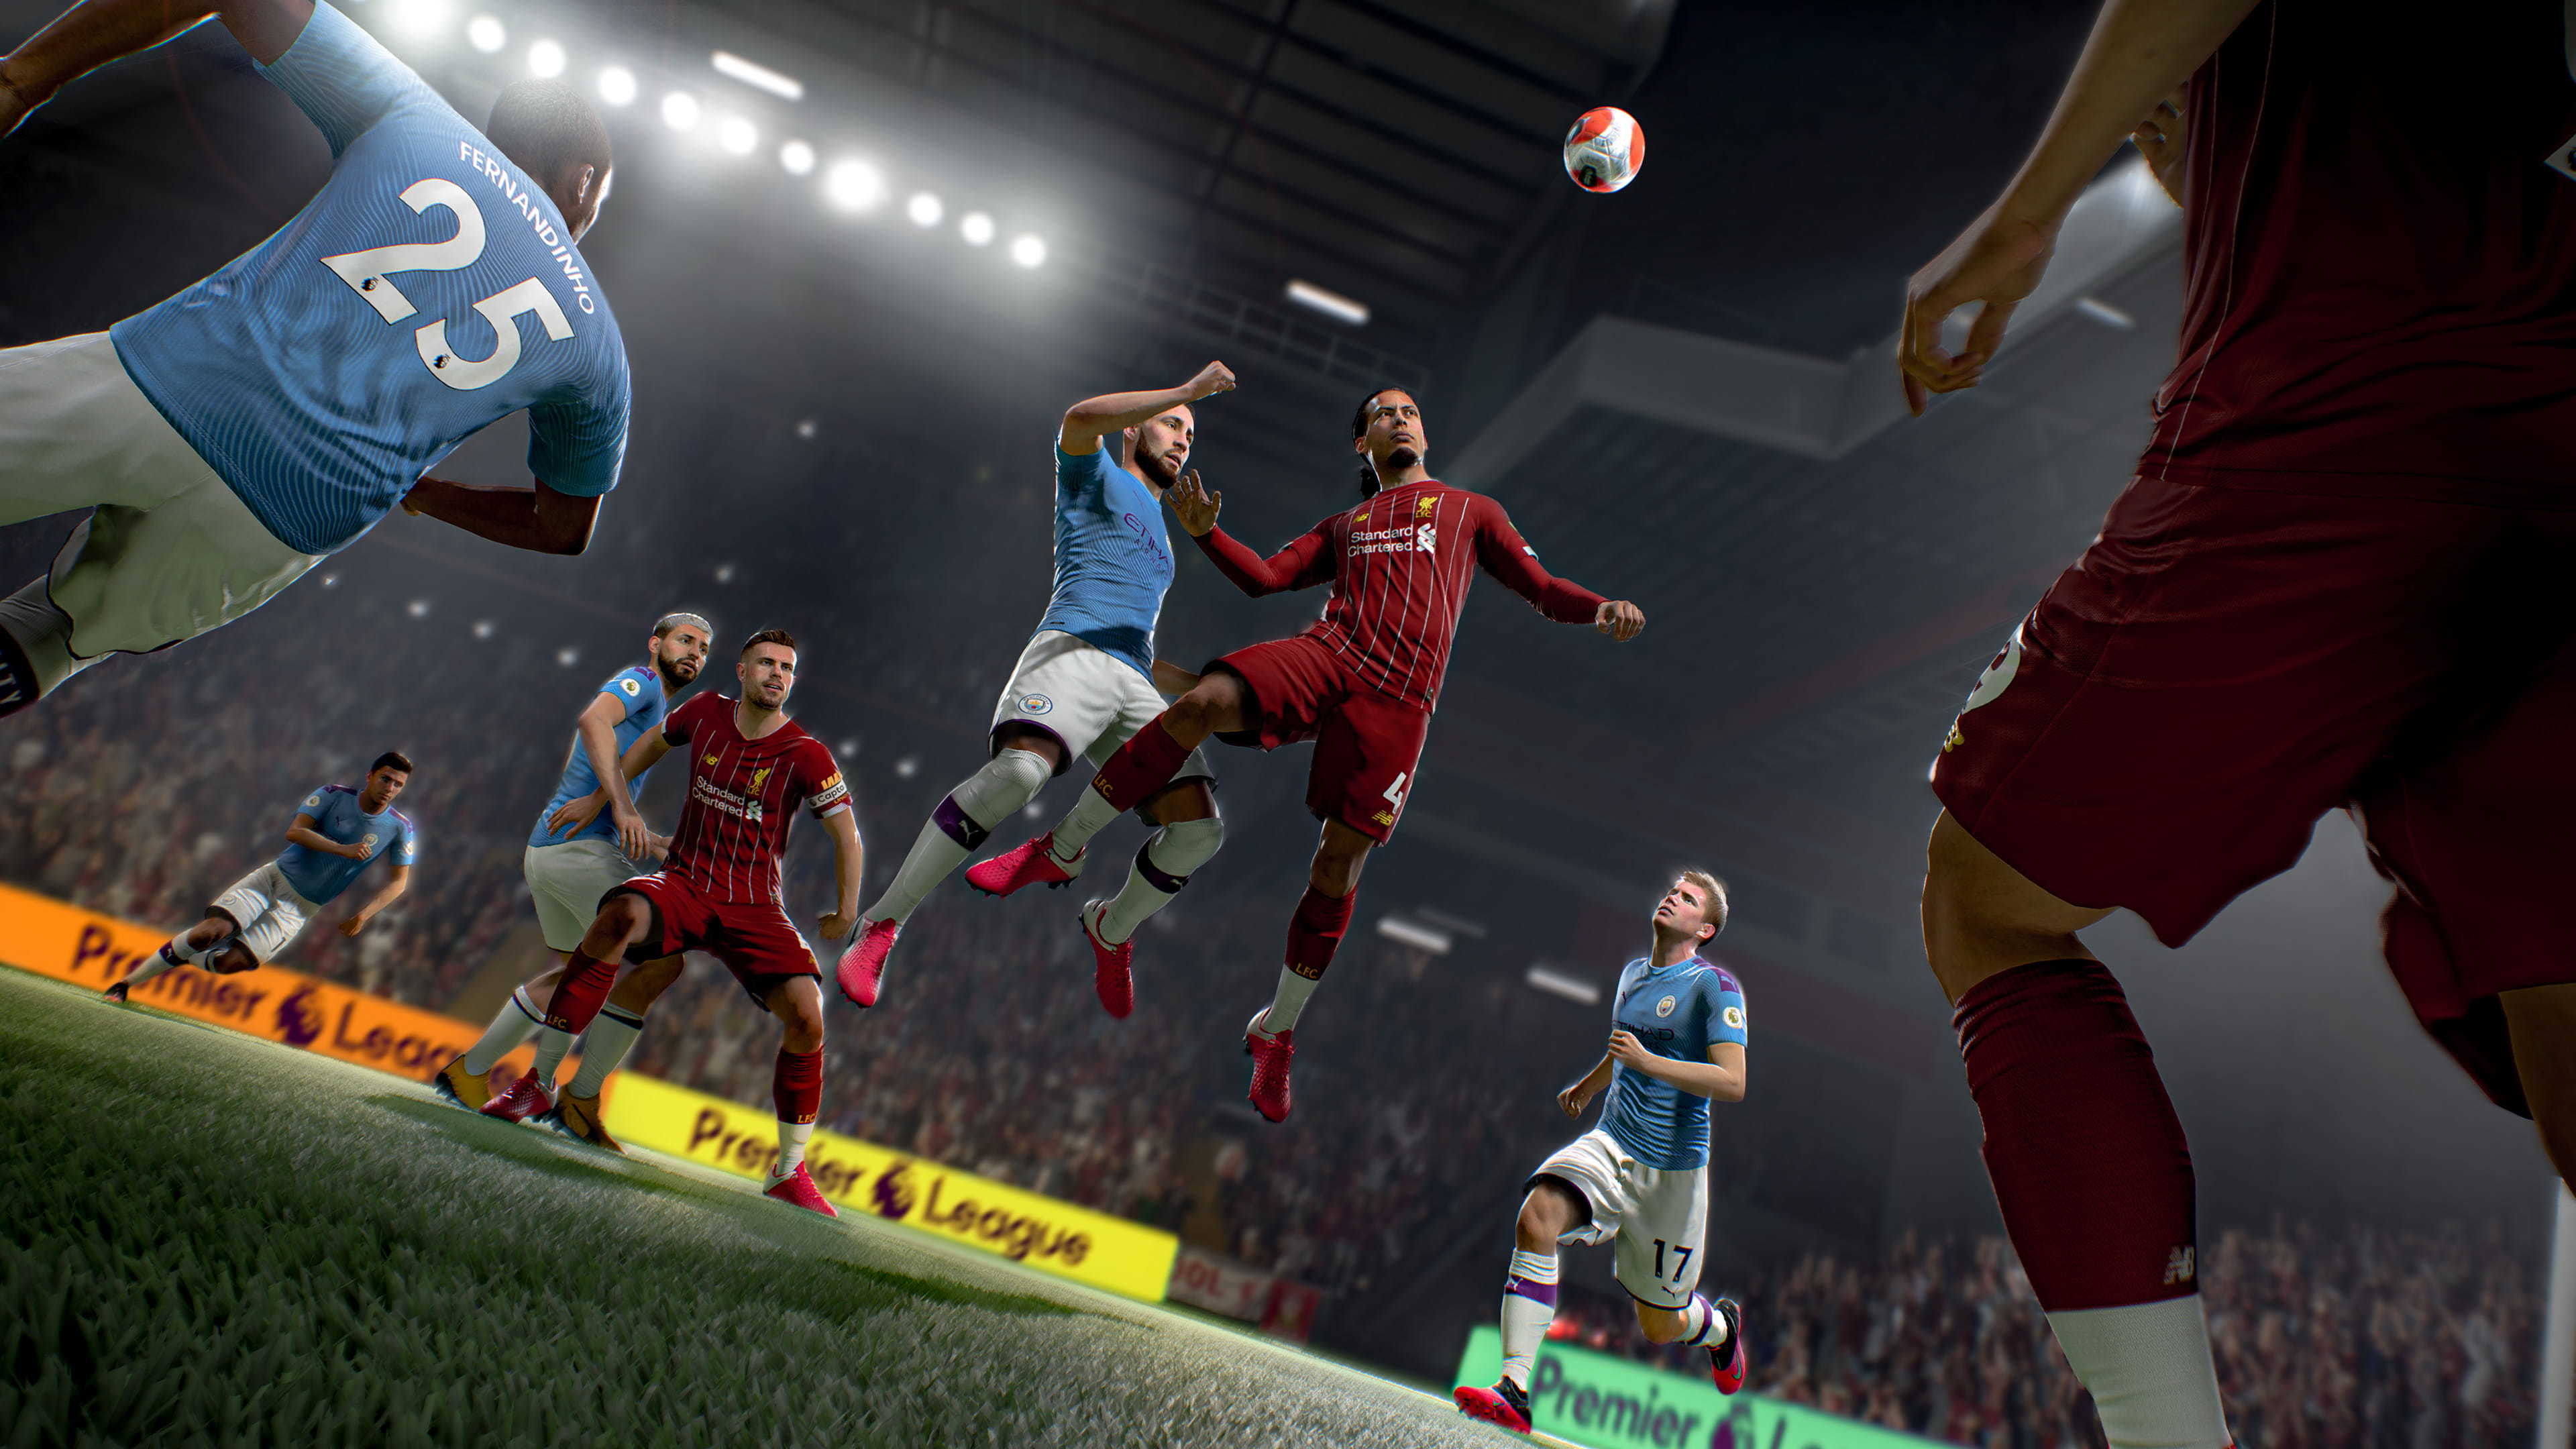 Tudo sobre FIFA 21: preço, jogadores, times, overall, cartas, dribles e  mais, fifa